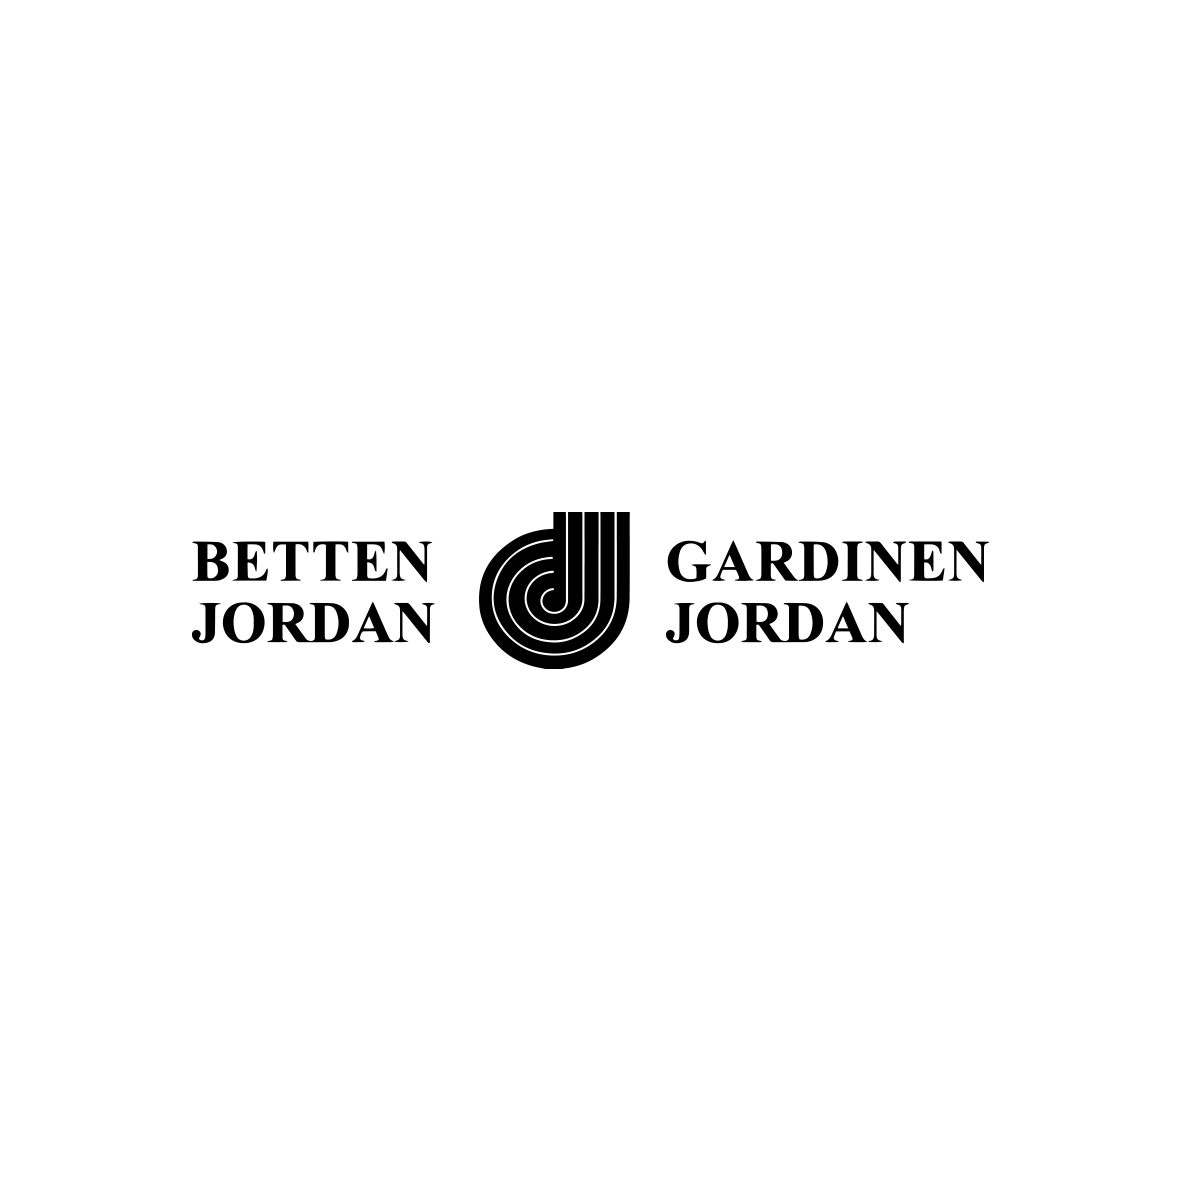 Betten Jordan logo